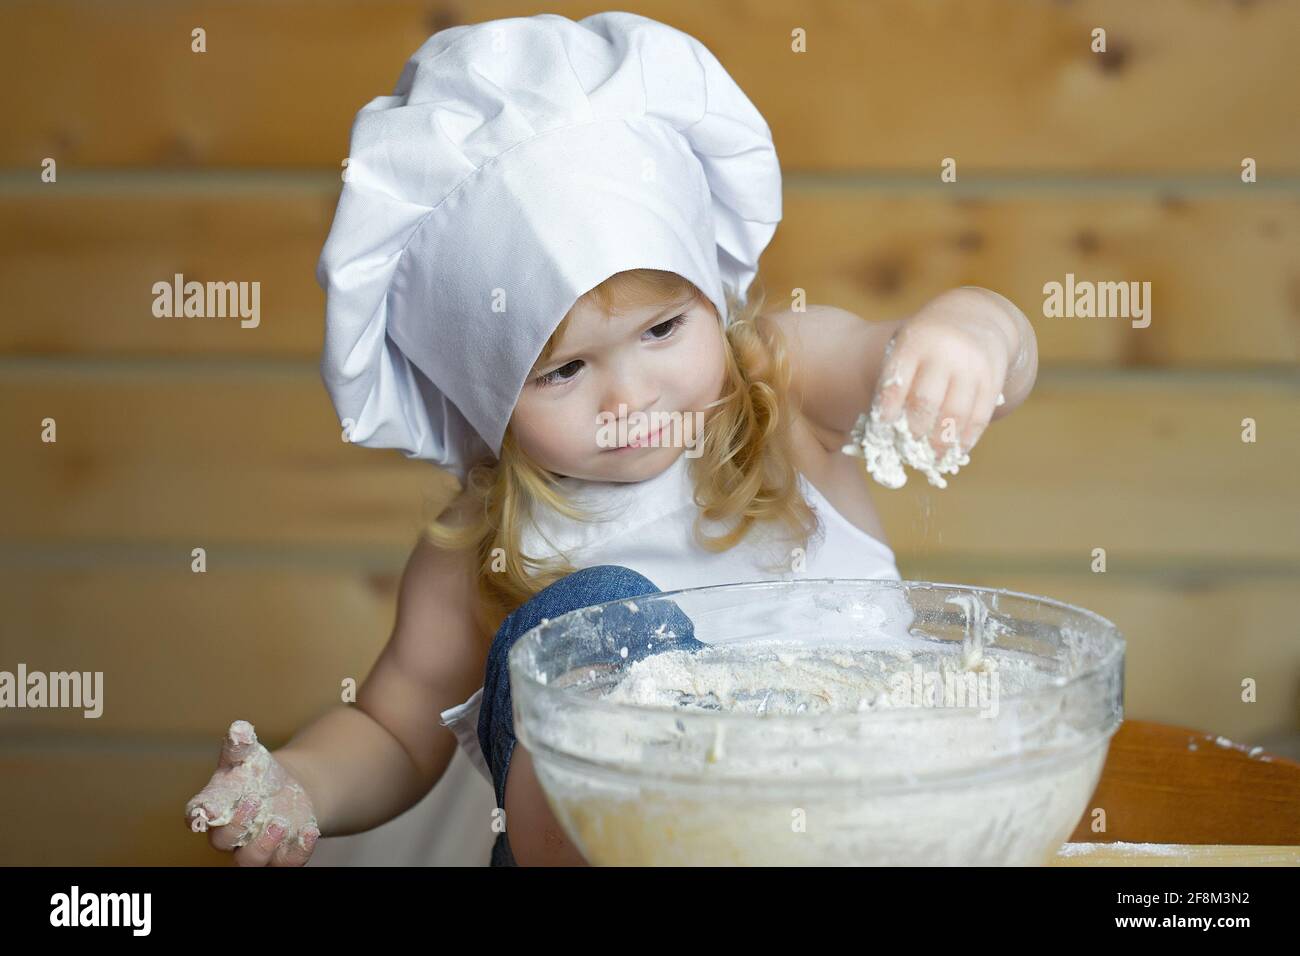 Baby cook Stock Photo by ©kirill_grekov 9124815